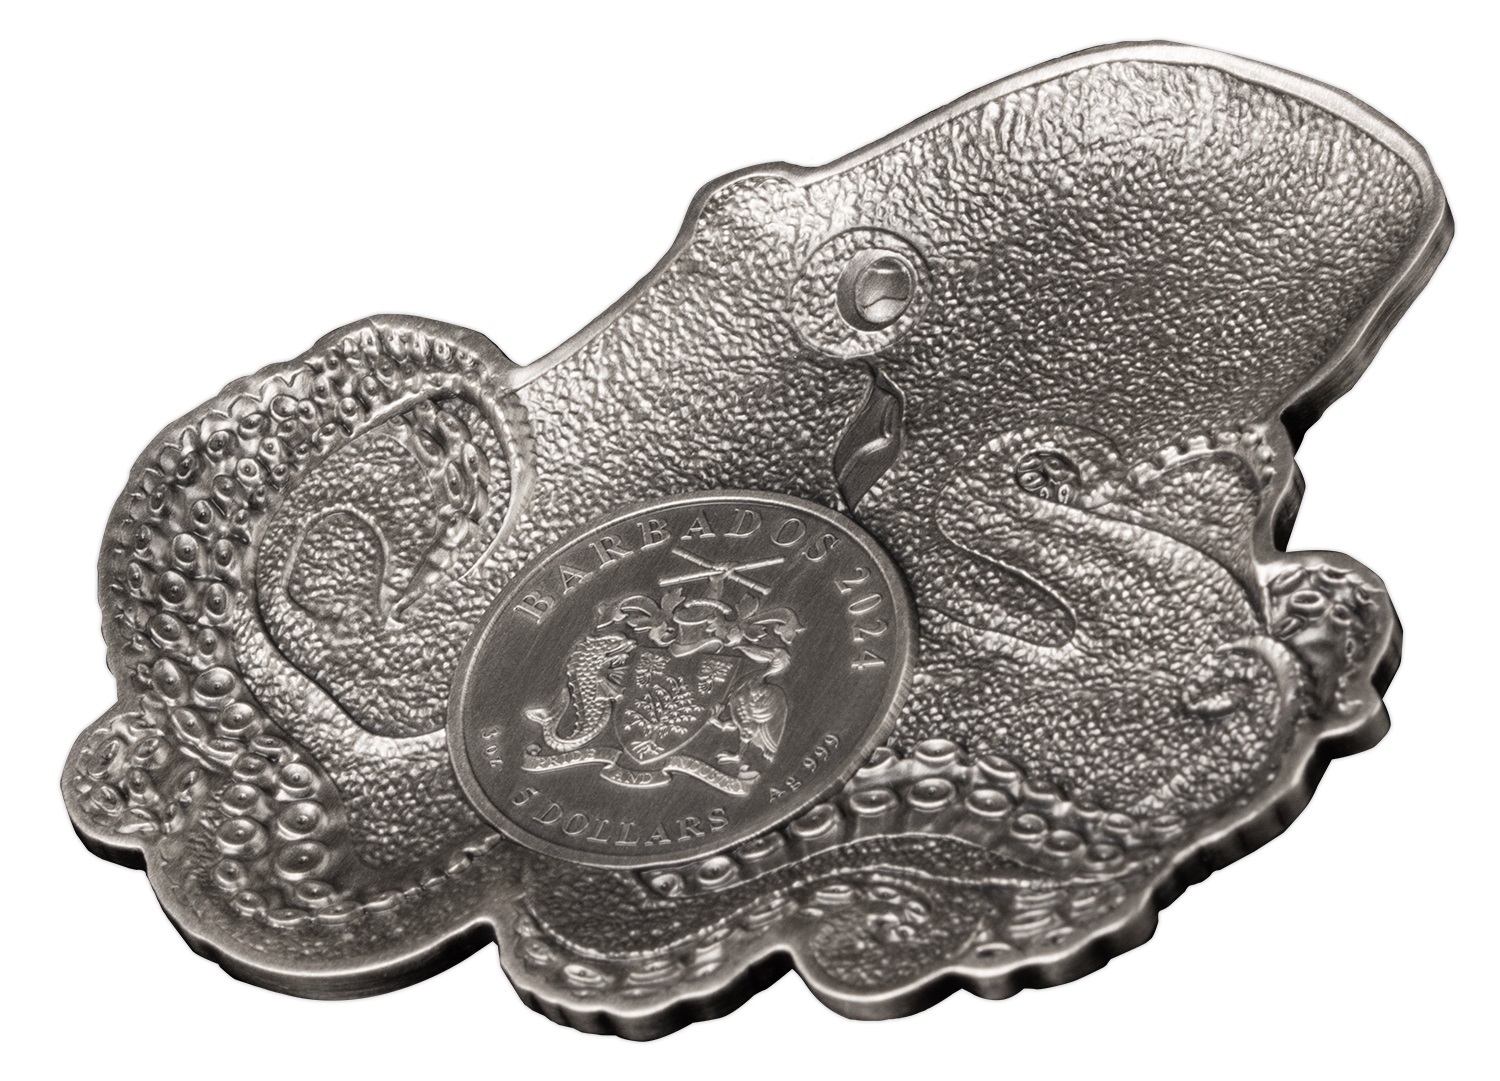 (W022.5.D.2024.3.oz.Ag.1583140116) 5 Dollars Barbados 2024 3 ounces Antique silver - The Octopus Obverse (zoom)